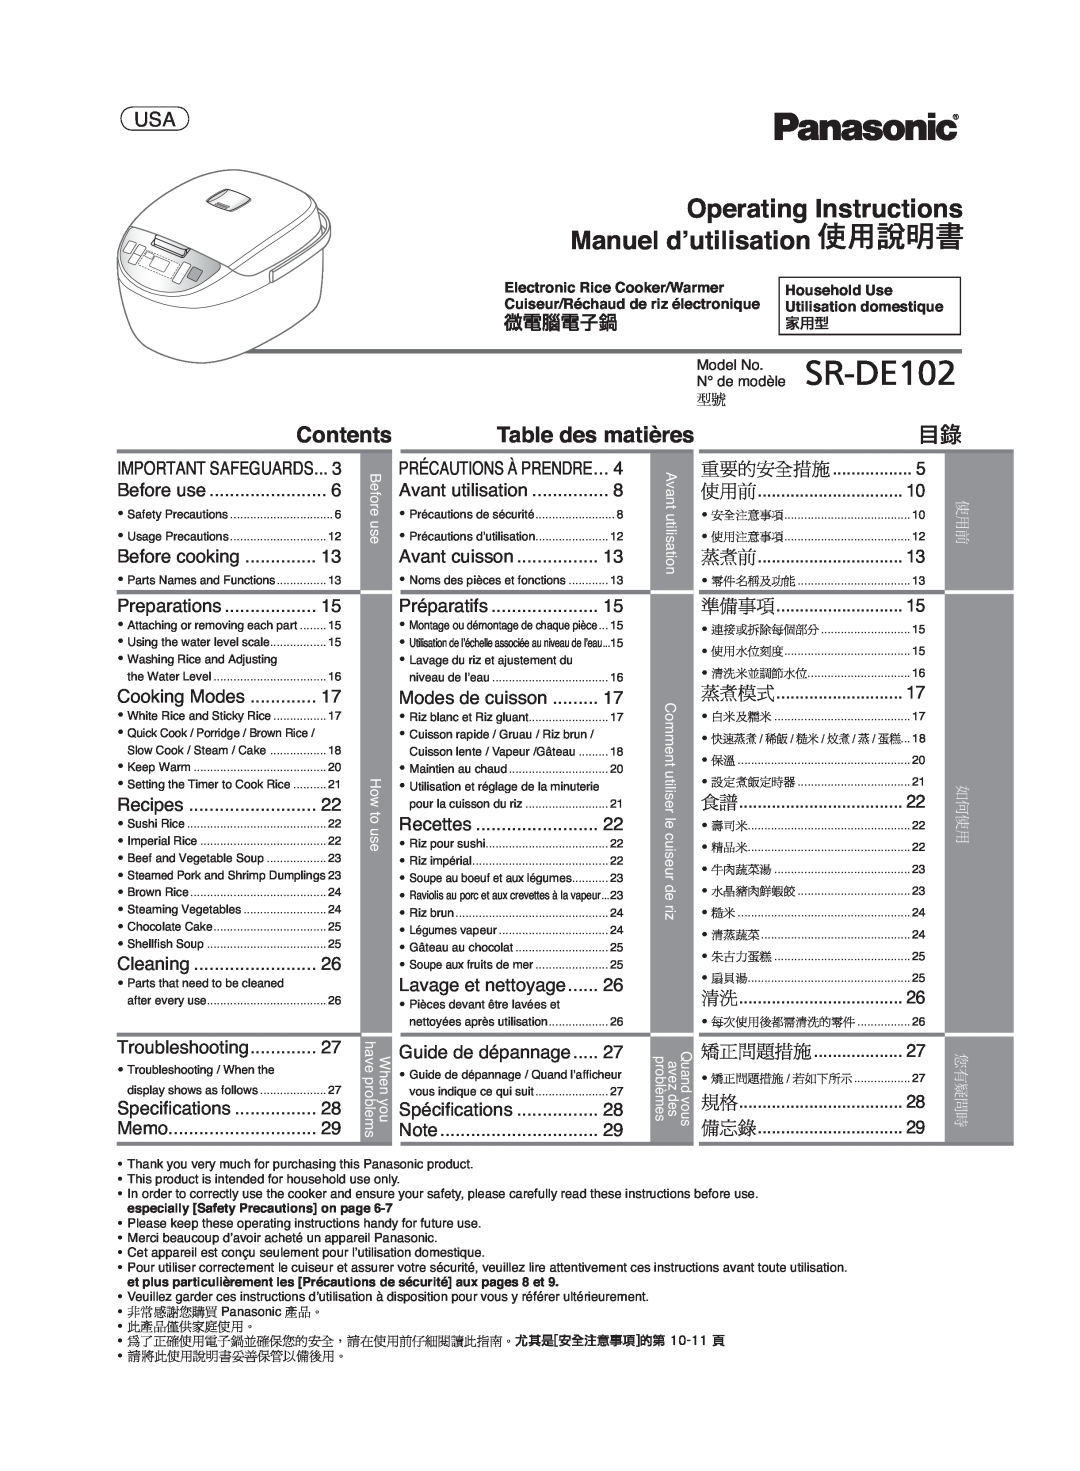 Panasonic SR-DE102 manuel dutilisation Operating Instructions Manuel d’utilisation, Contents, Table des matières, Recipes 